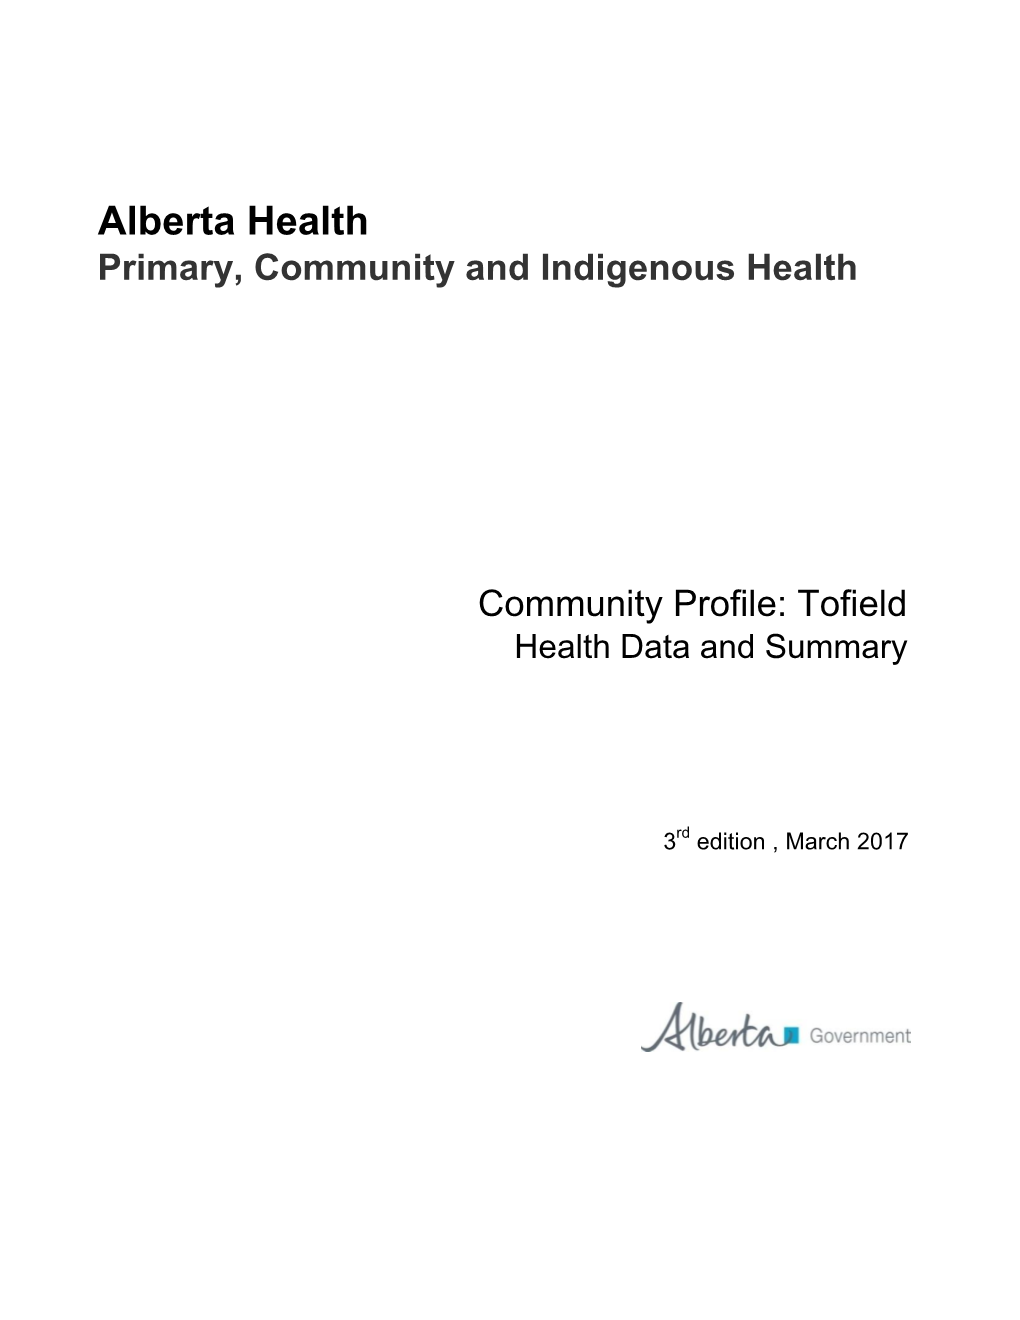 Tofield Health Data and Summary